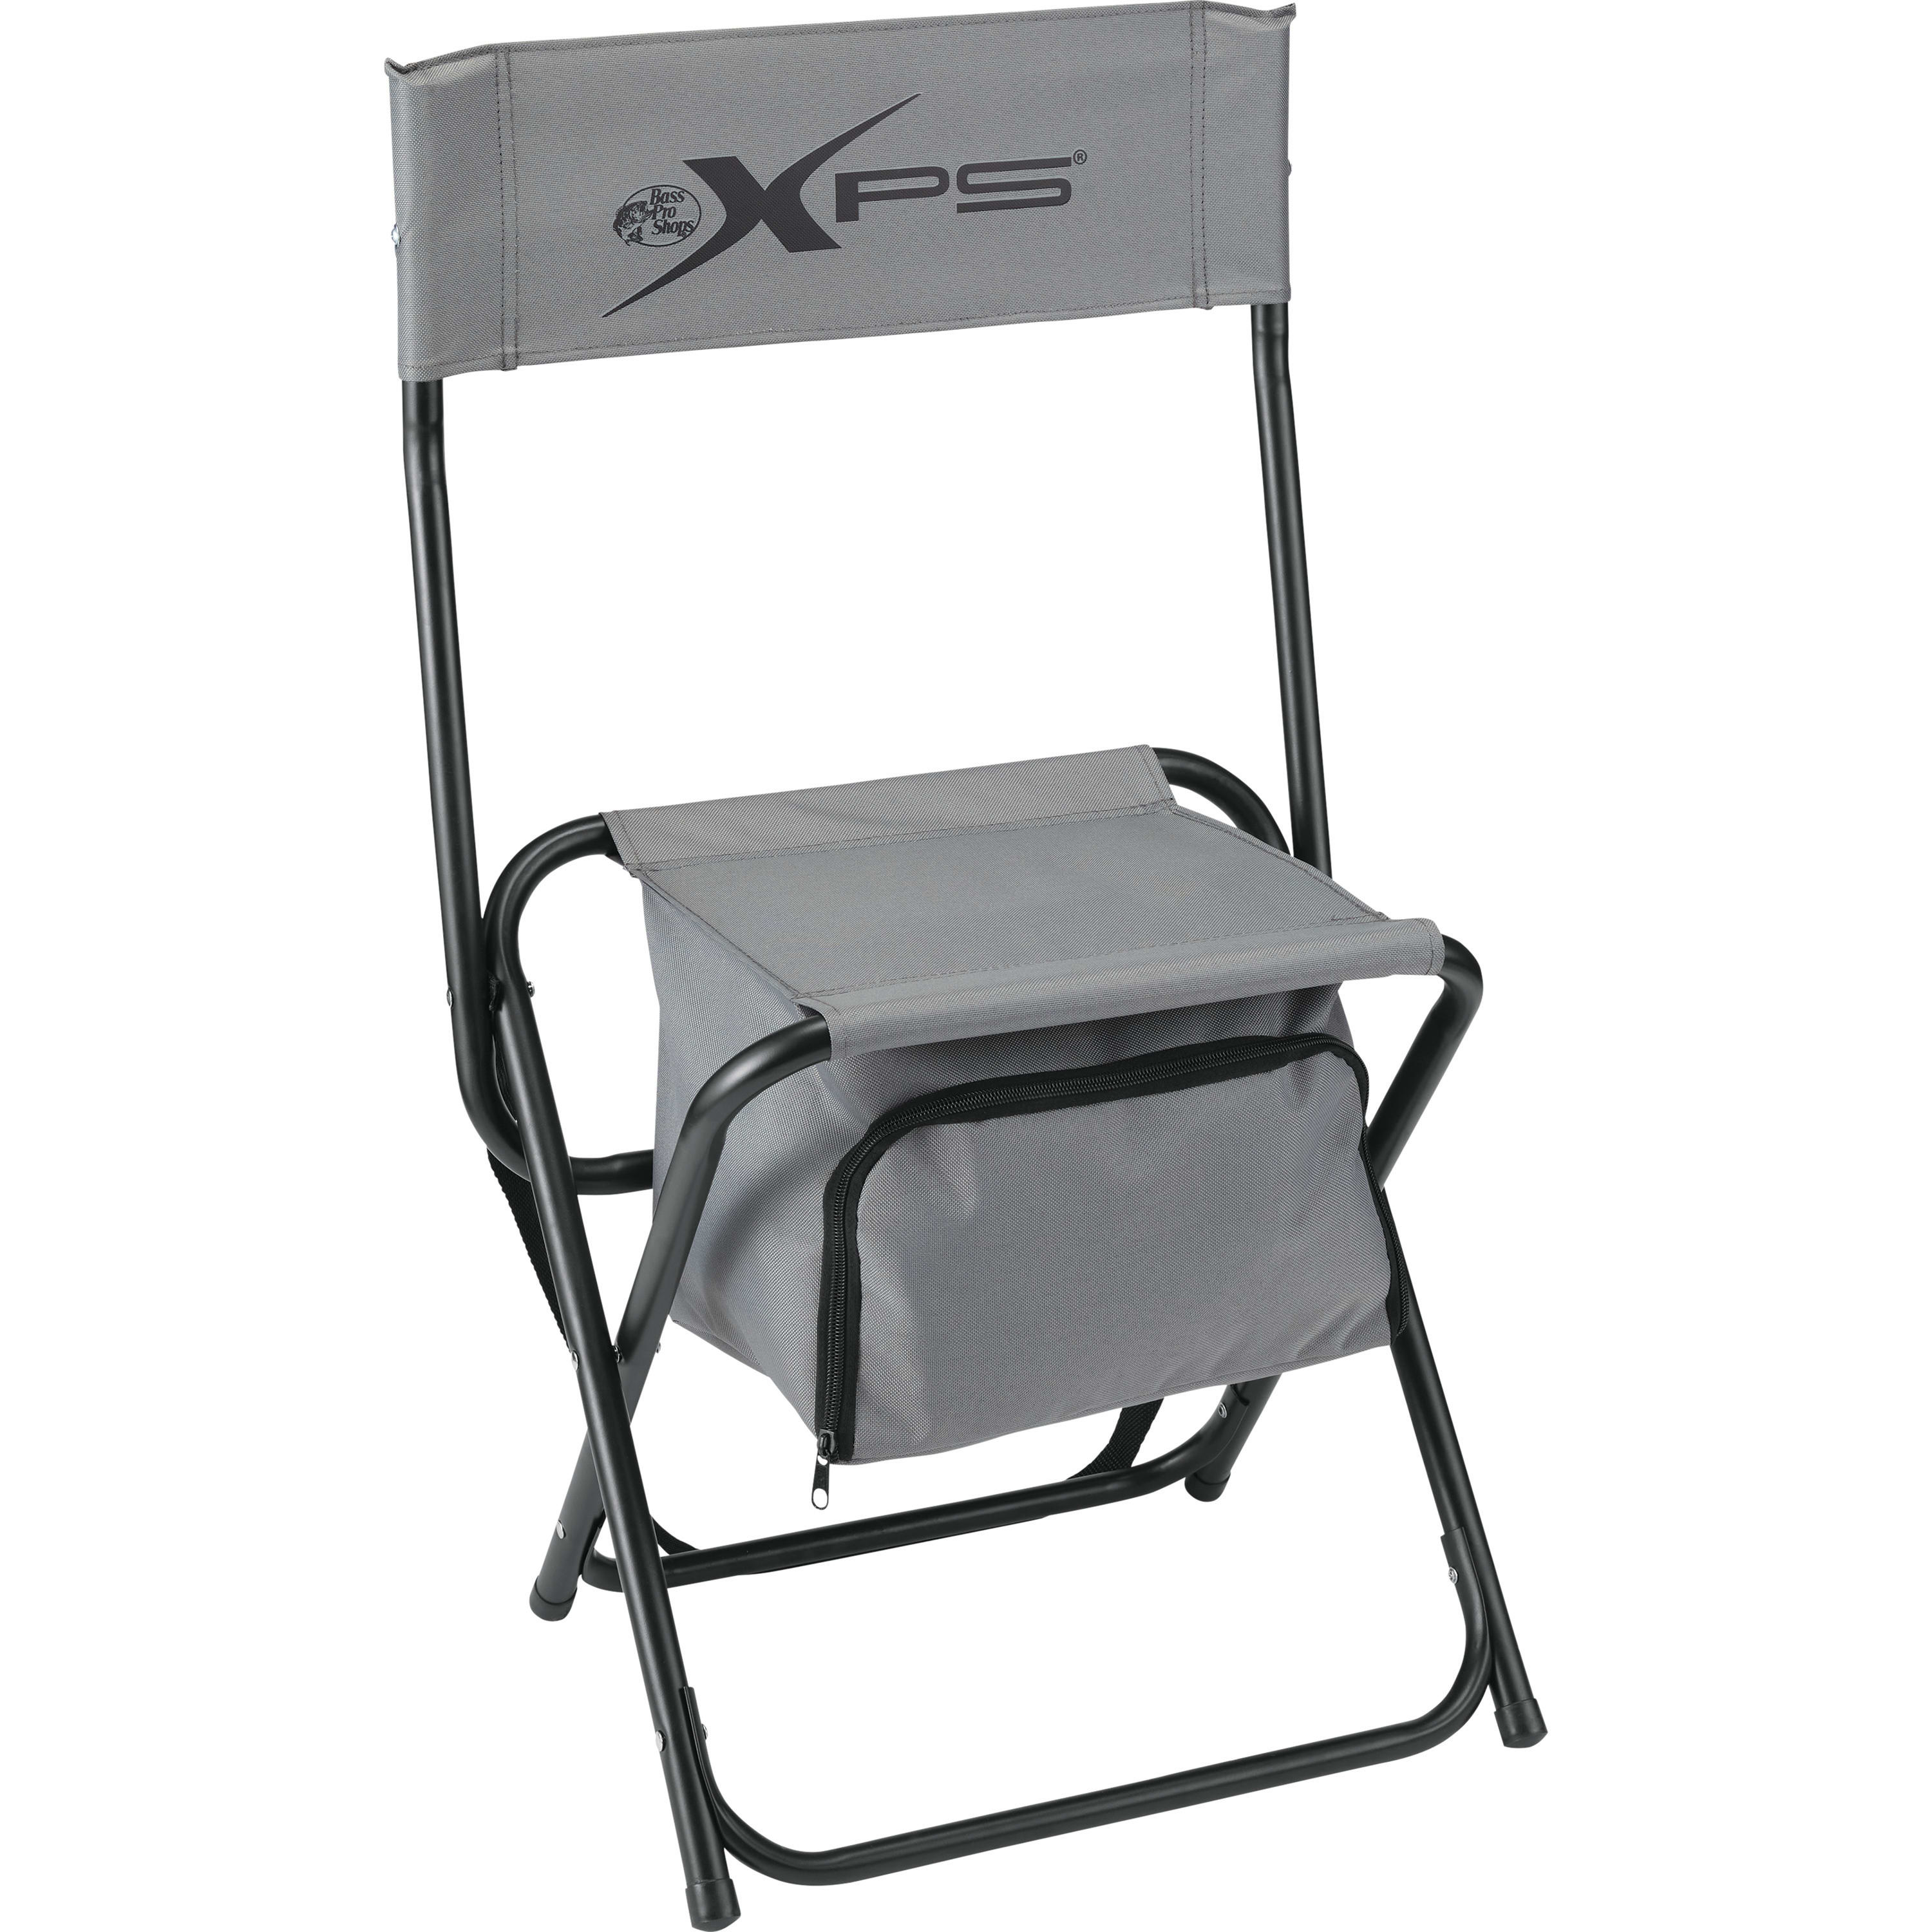 Bass Pro Shops® XPS® 4-Legged Ice Fishing Chair